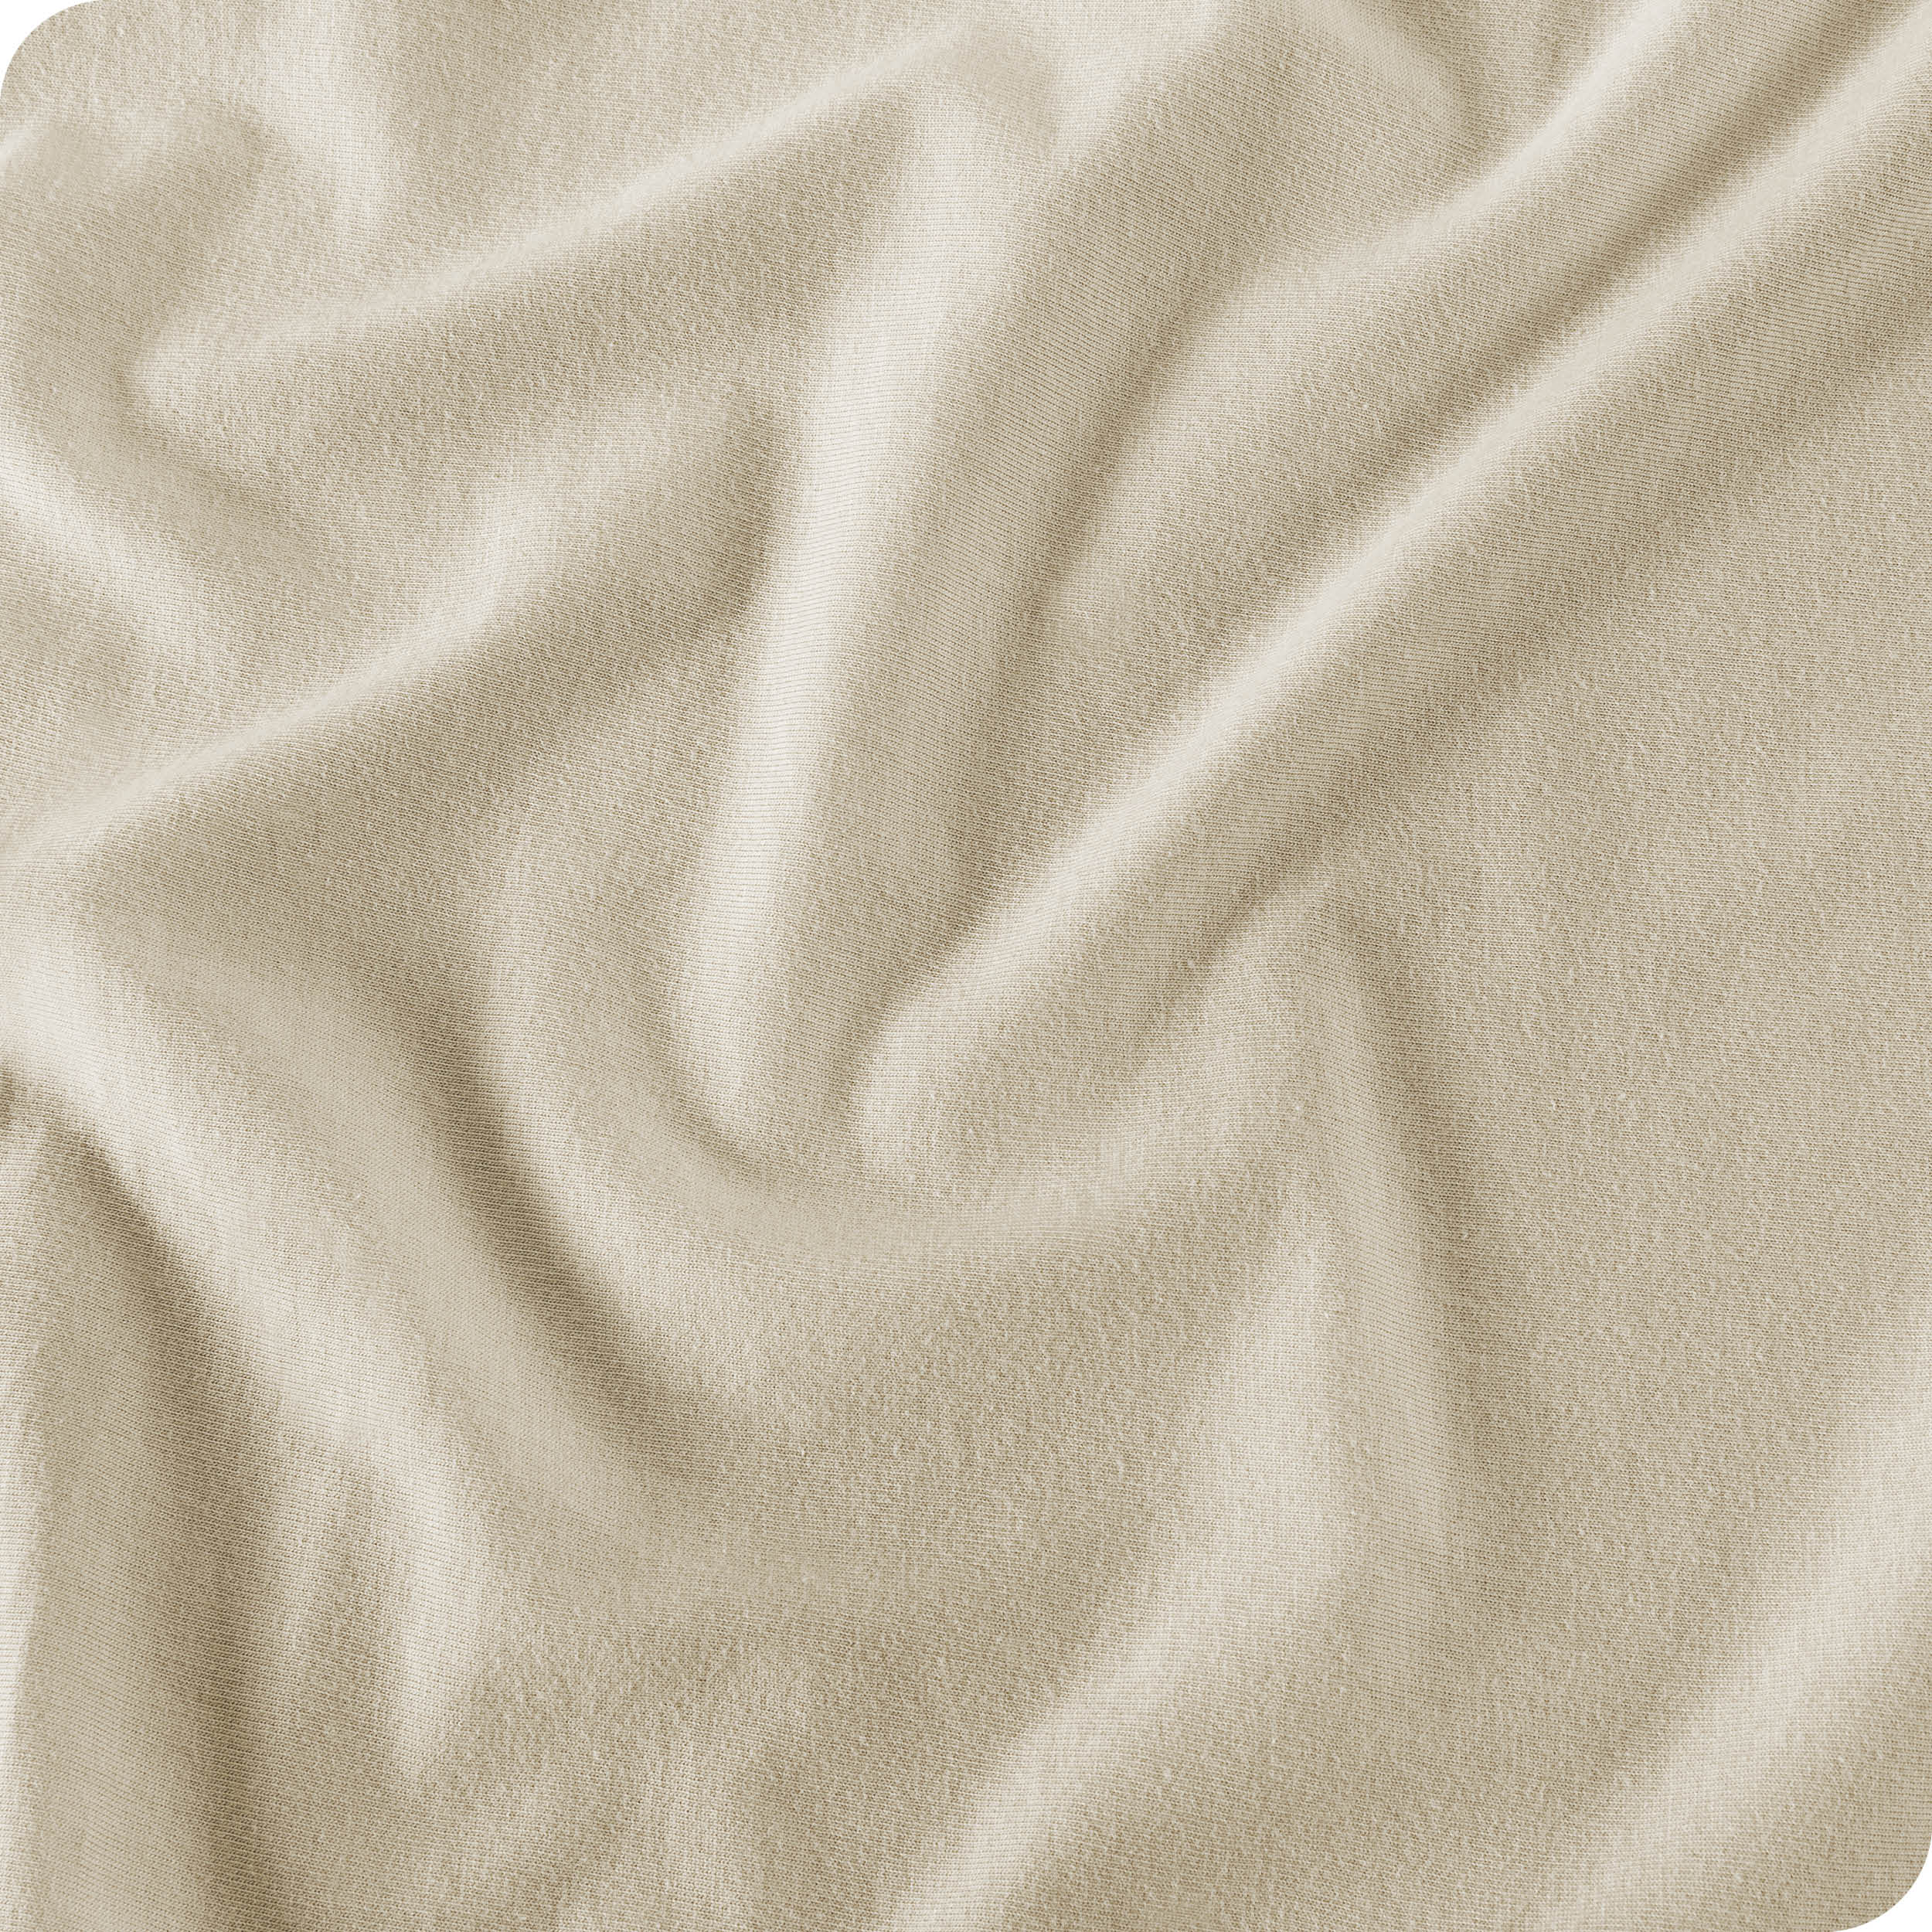 Close up of organic cotton jersey sheet material